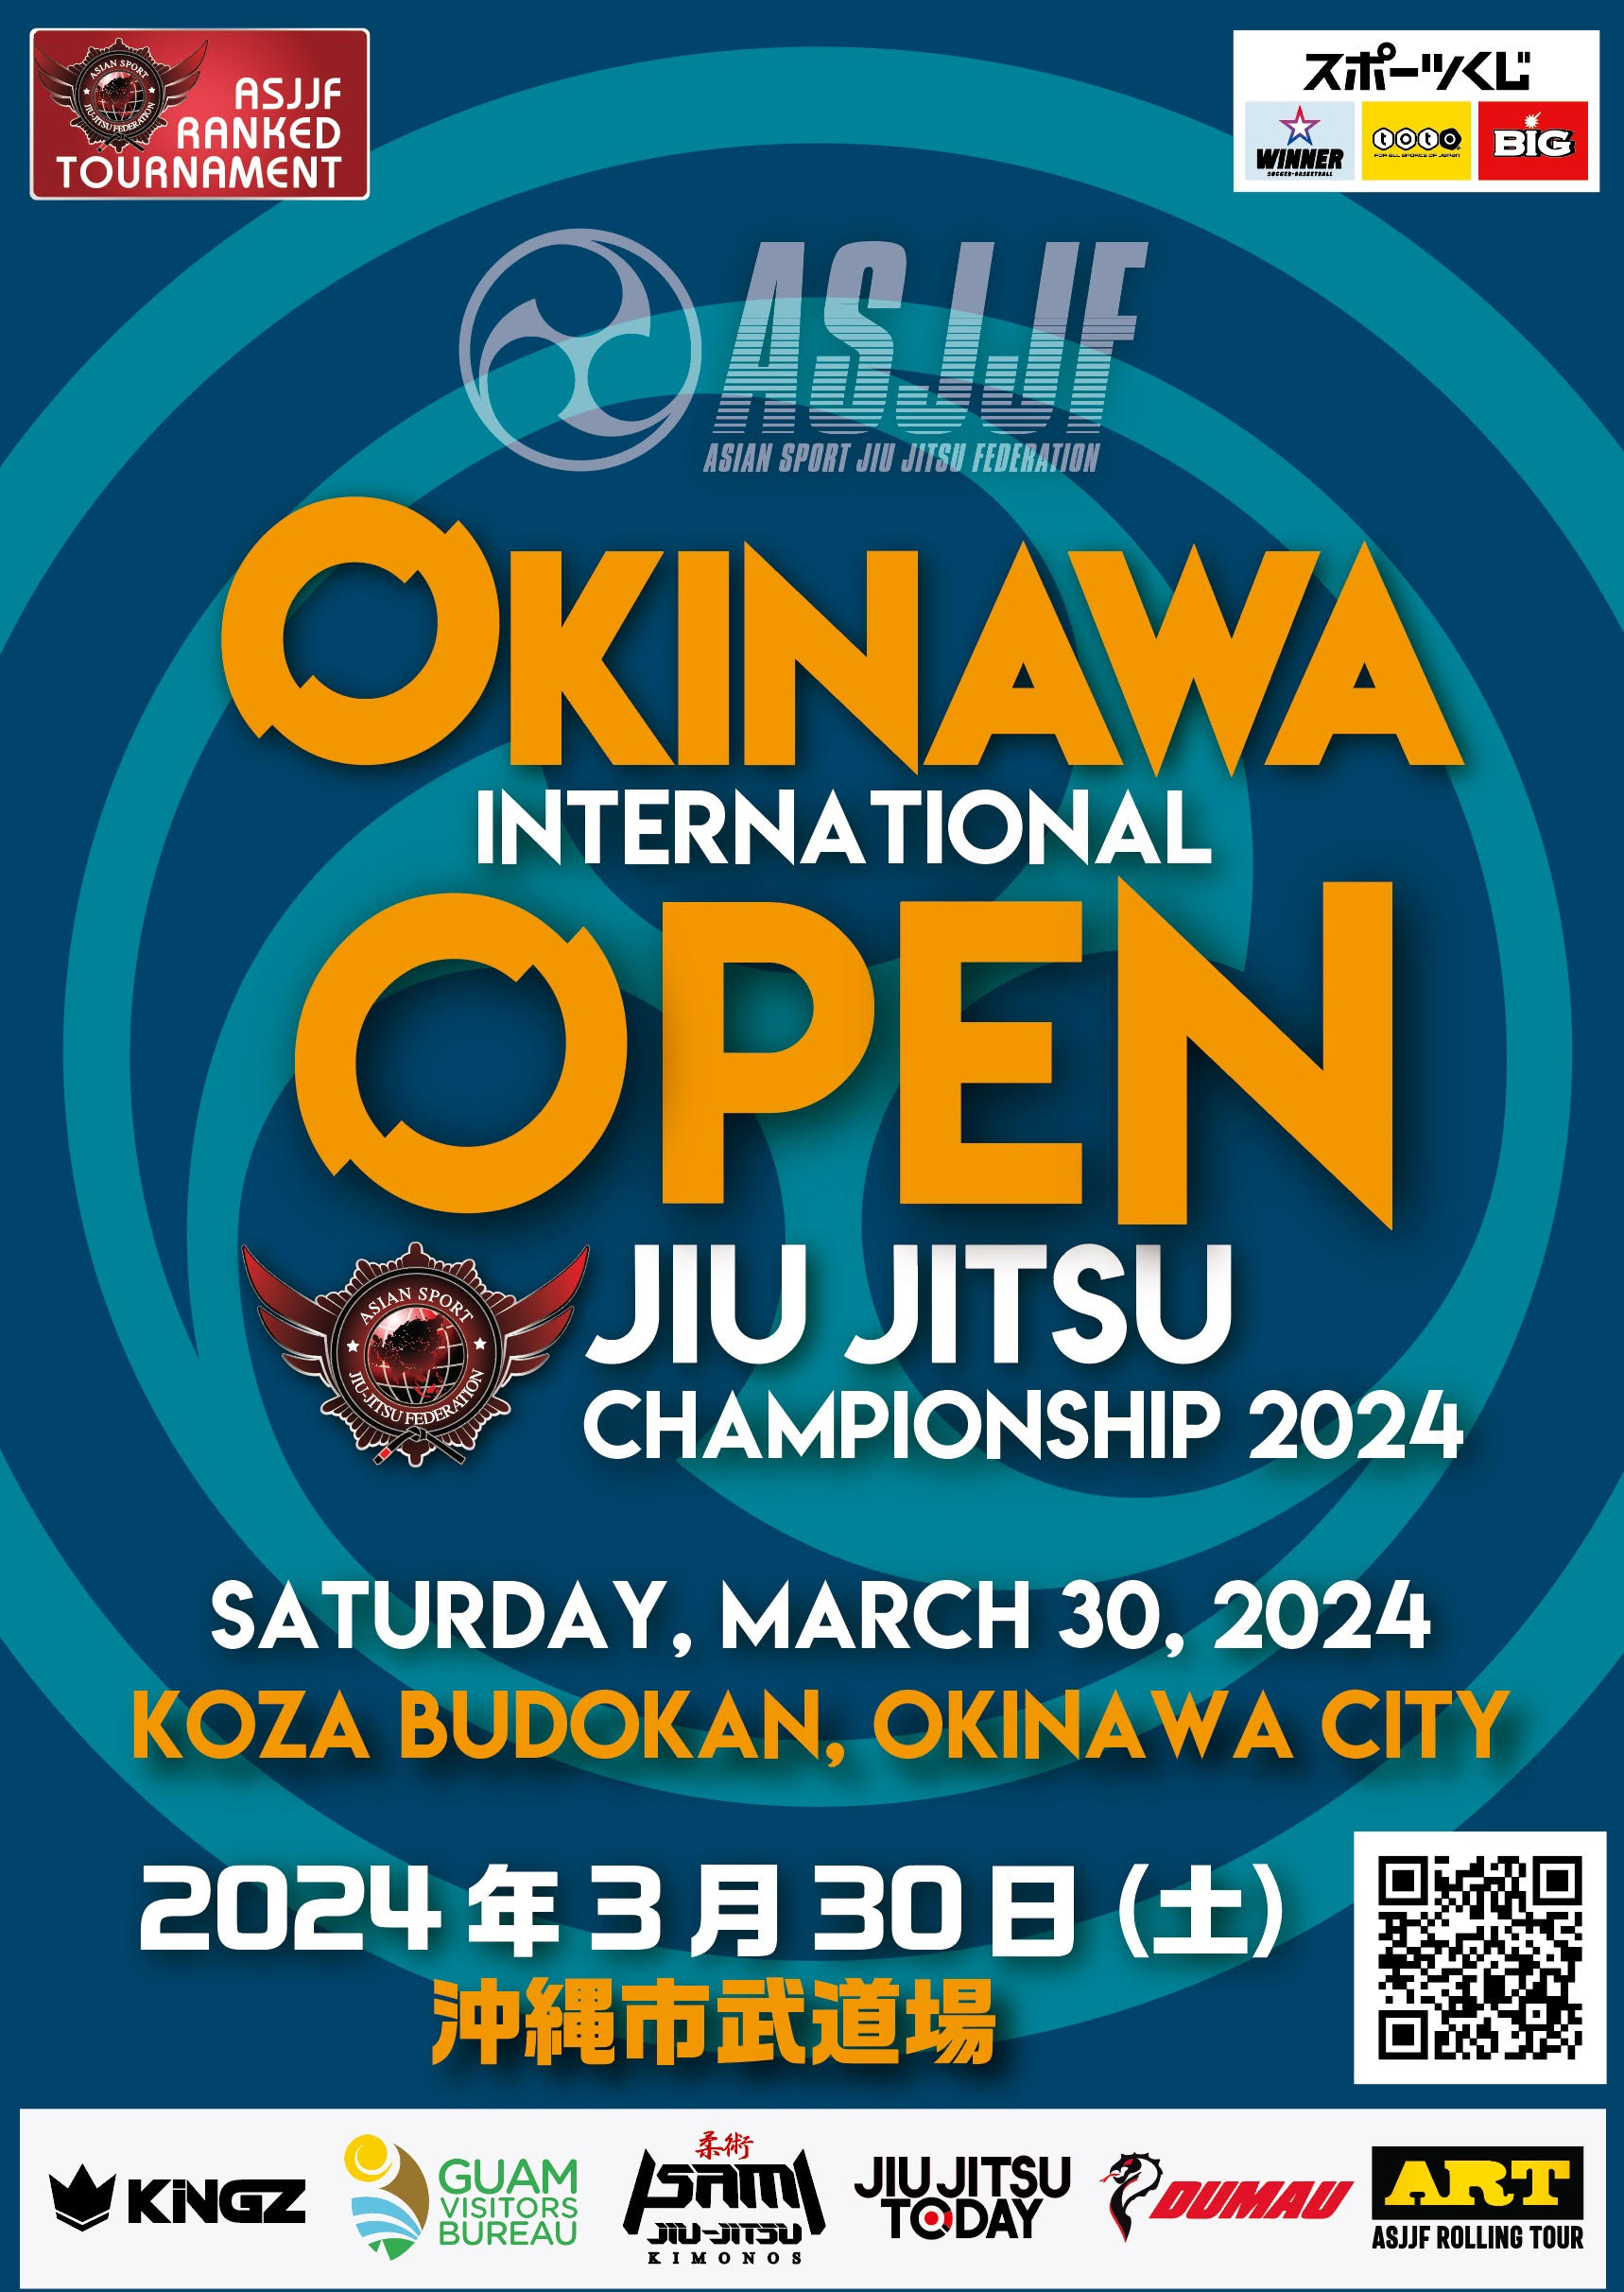 okinawa international open jiu jitsu championship 2024